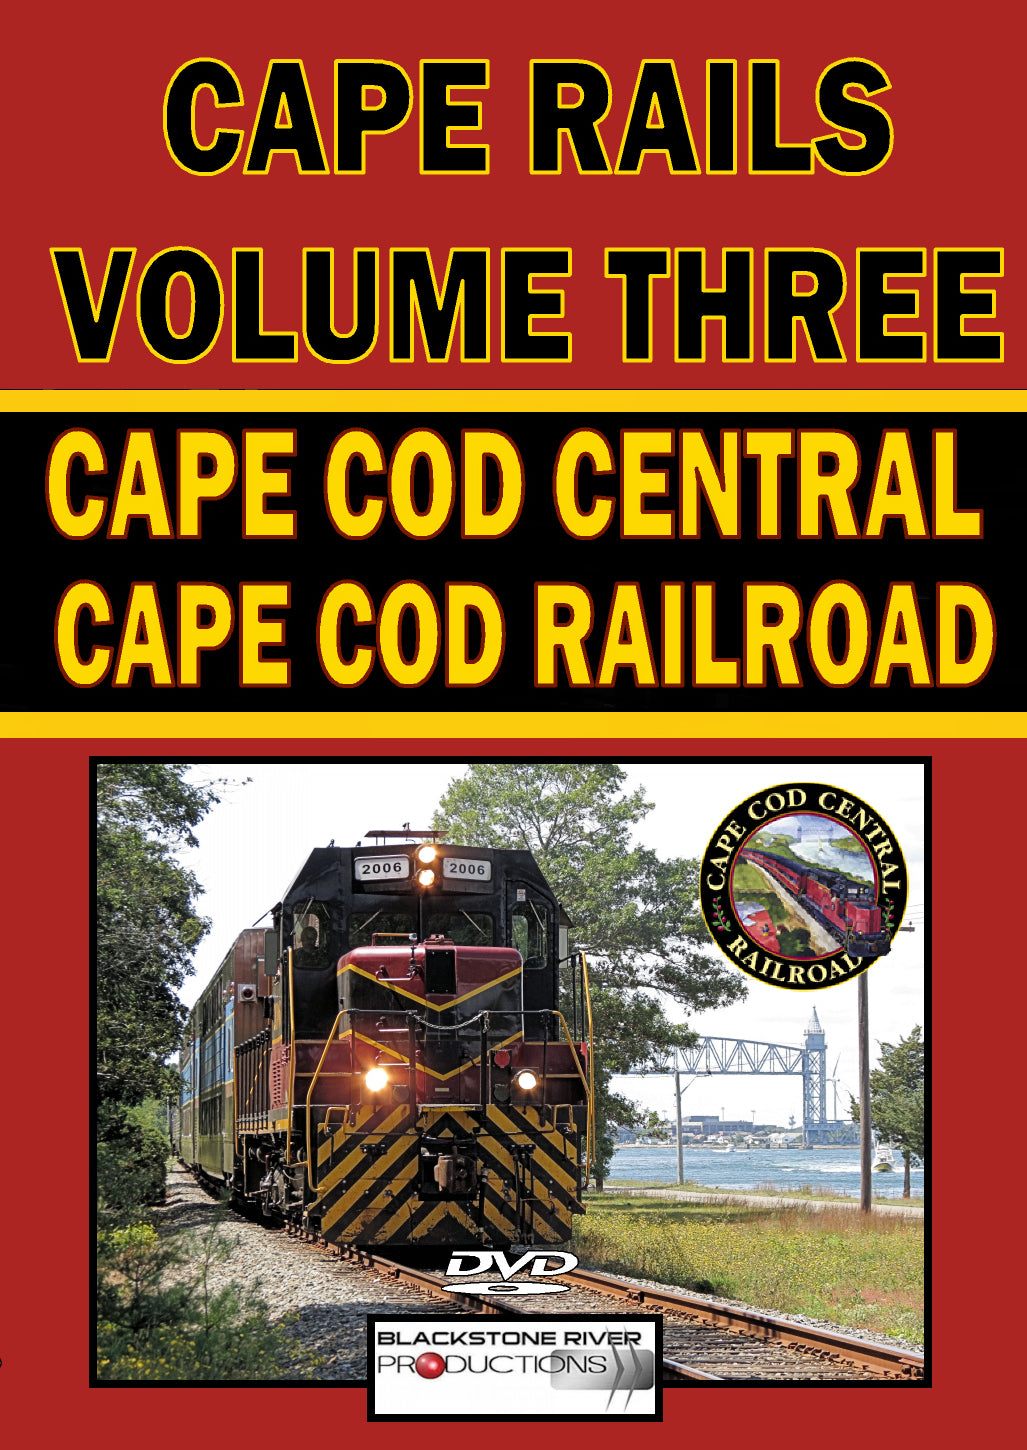 500-071 CAPE RAILS VOLUME THREE